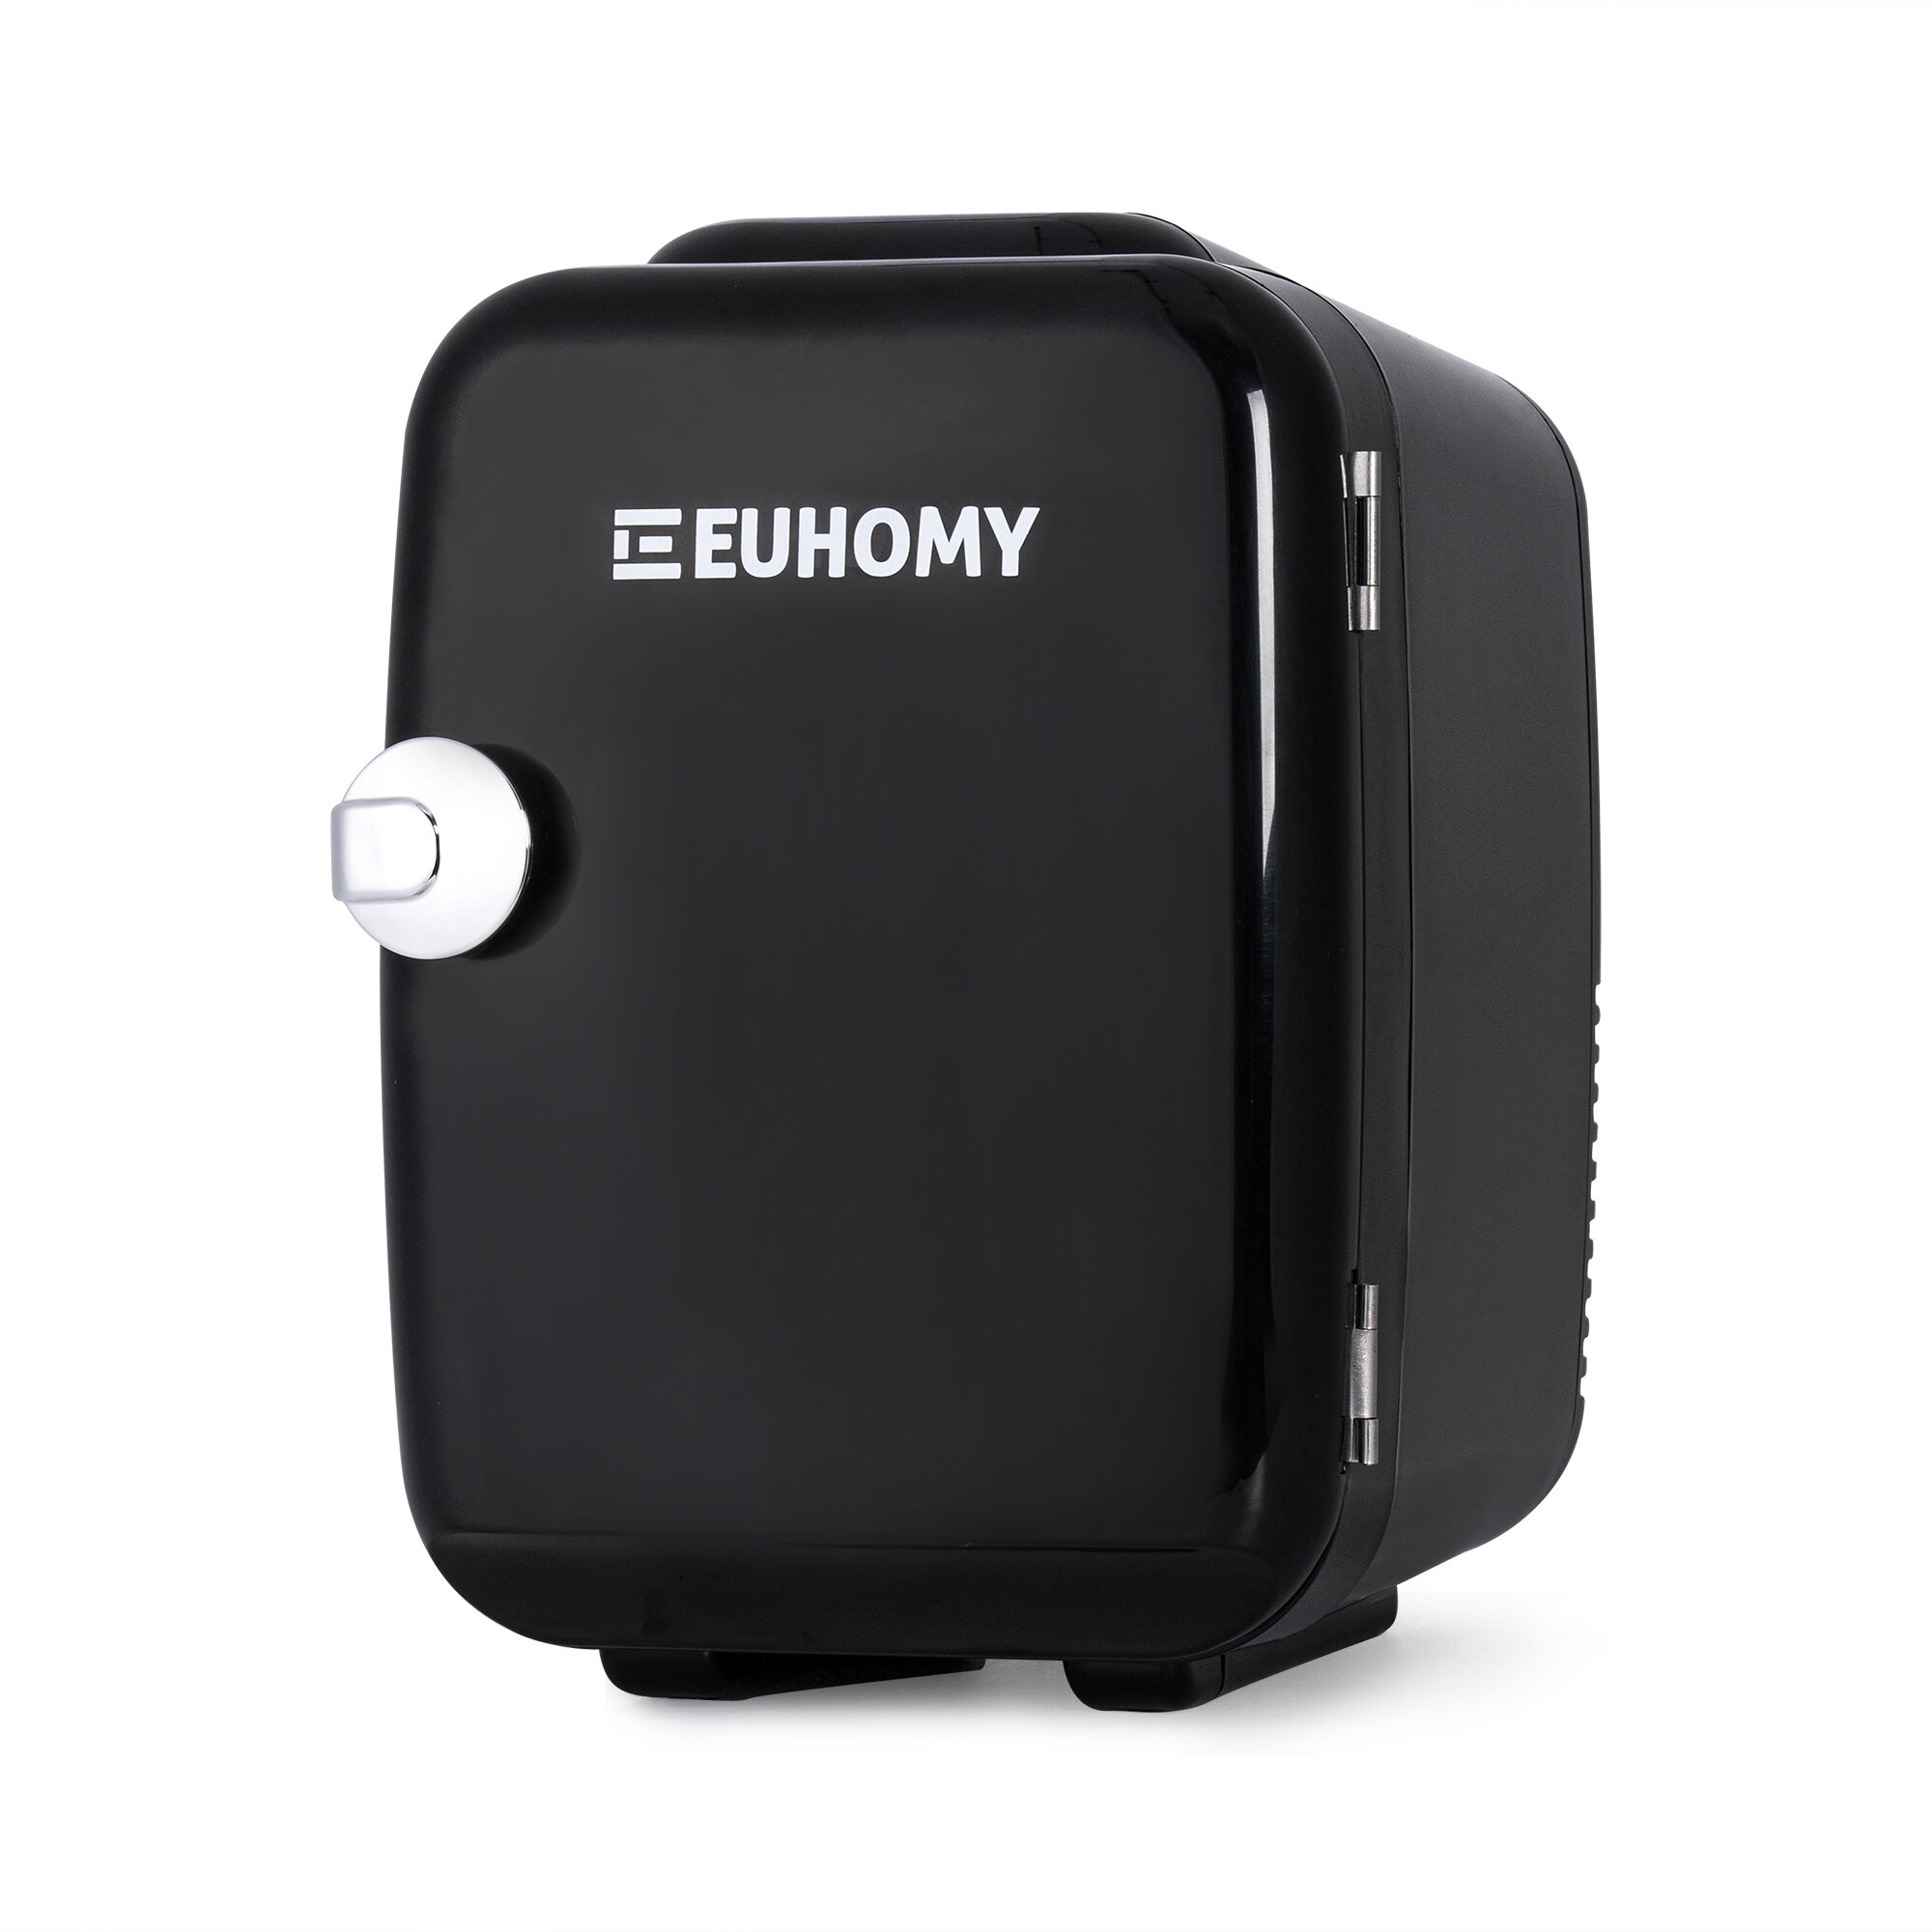 Euhomy 0.14 Cubic Feet Portable Countertop Mini Fridge